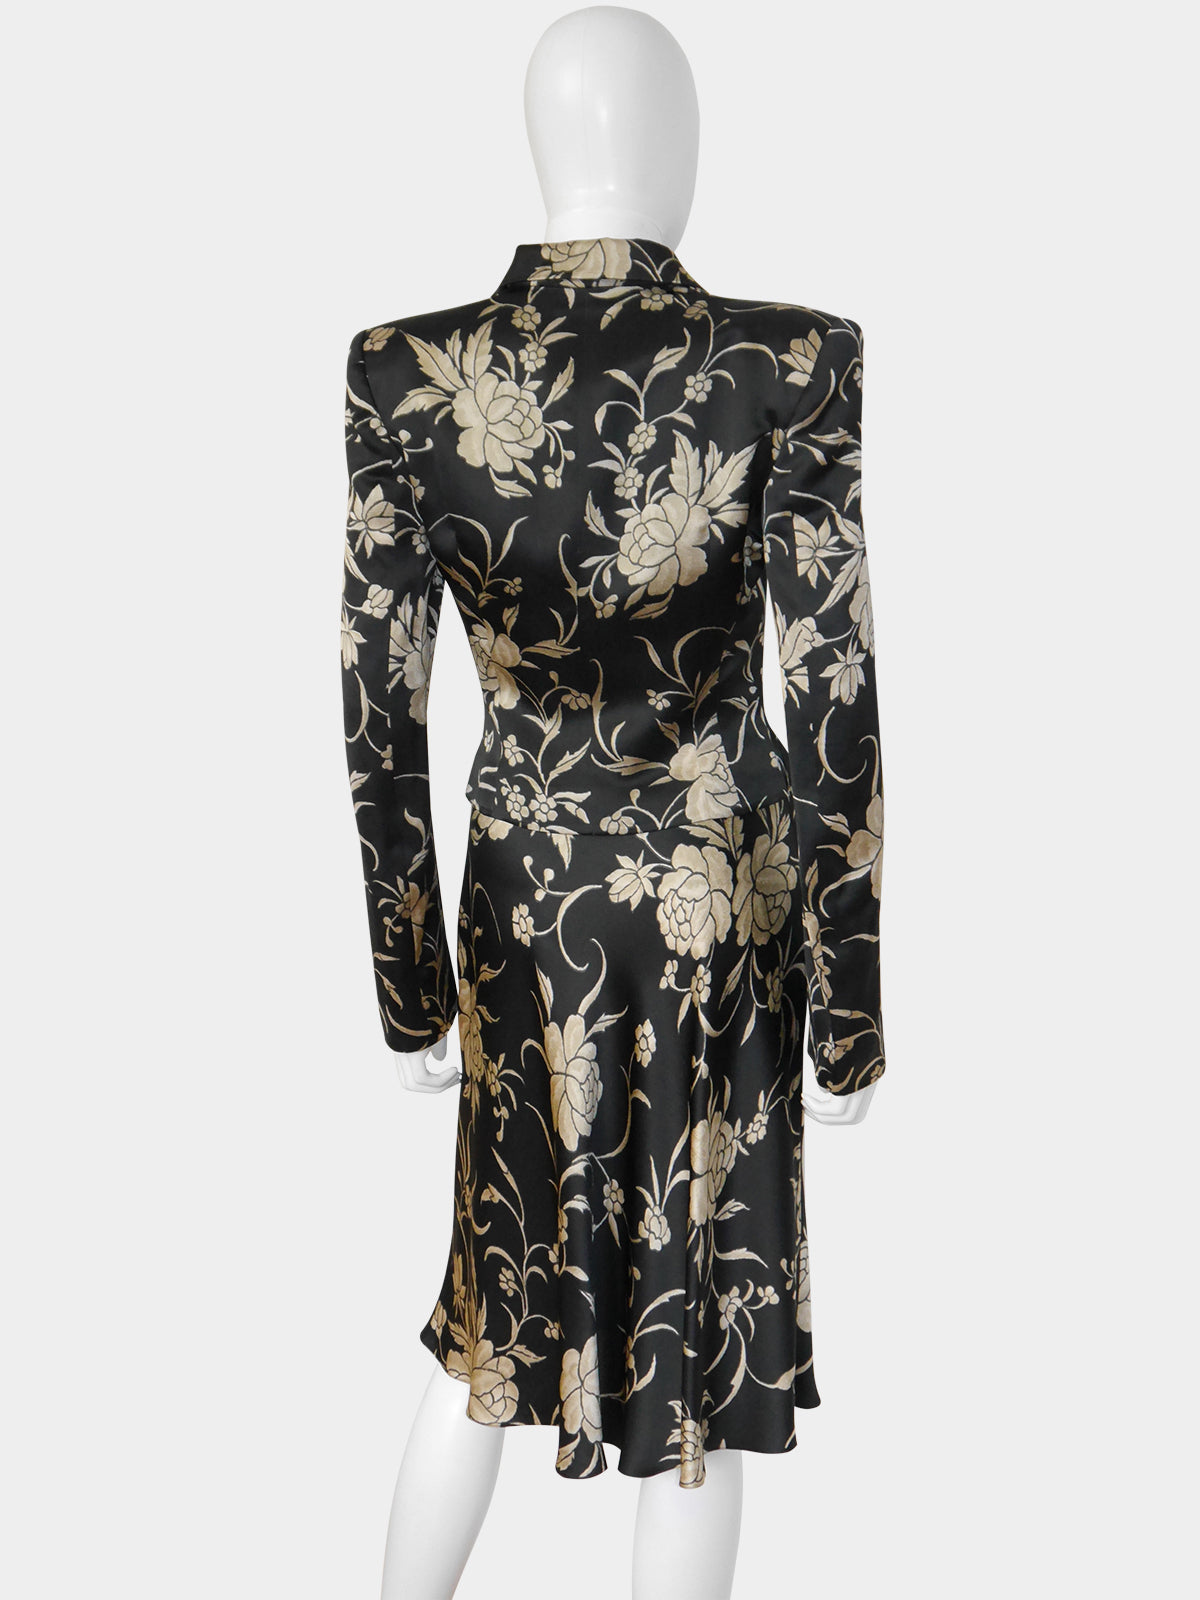 JOHN GALLIANO Spring 1997 Vintage Floral Jacquard Slip Dress & Jacket Size S-M